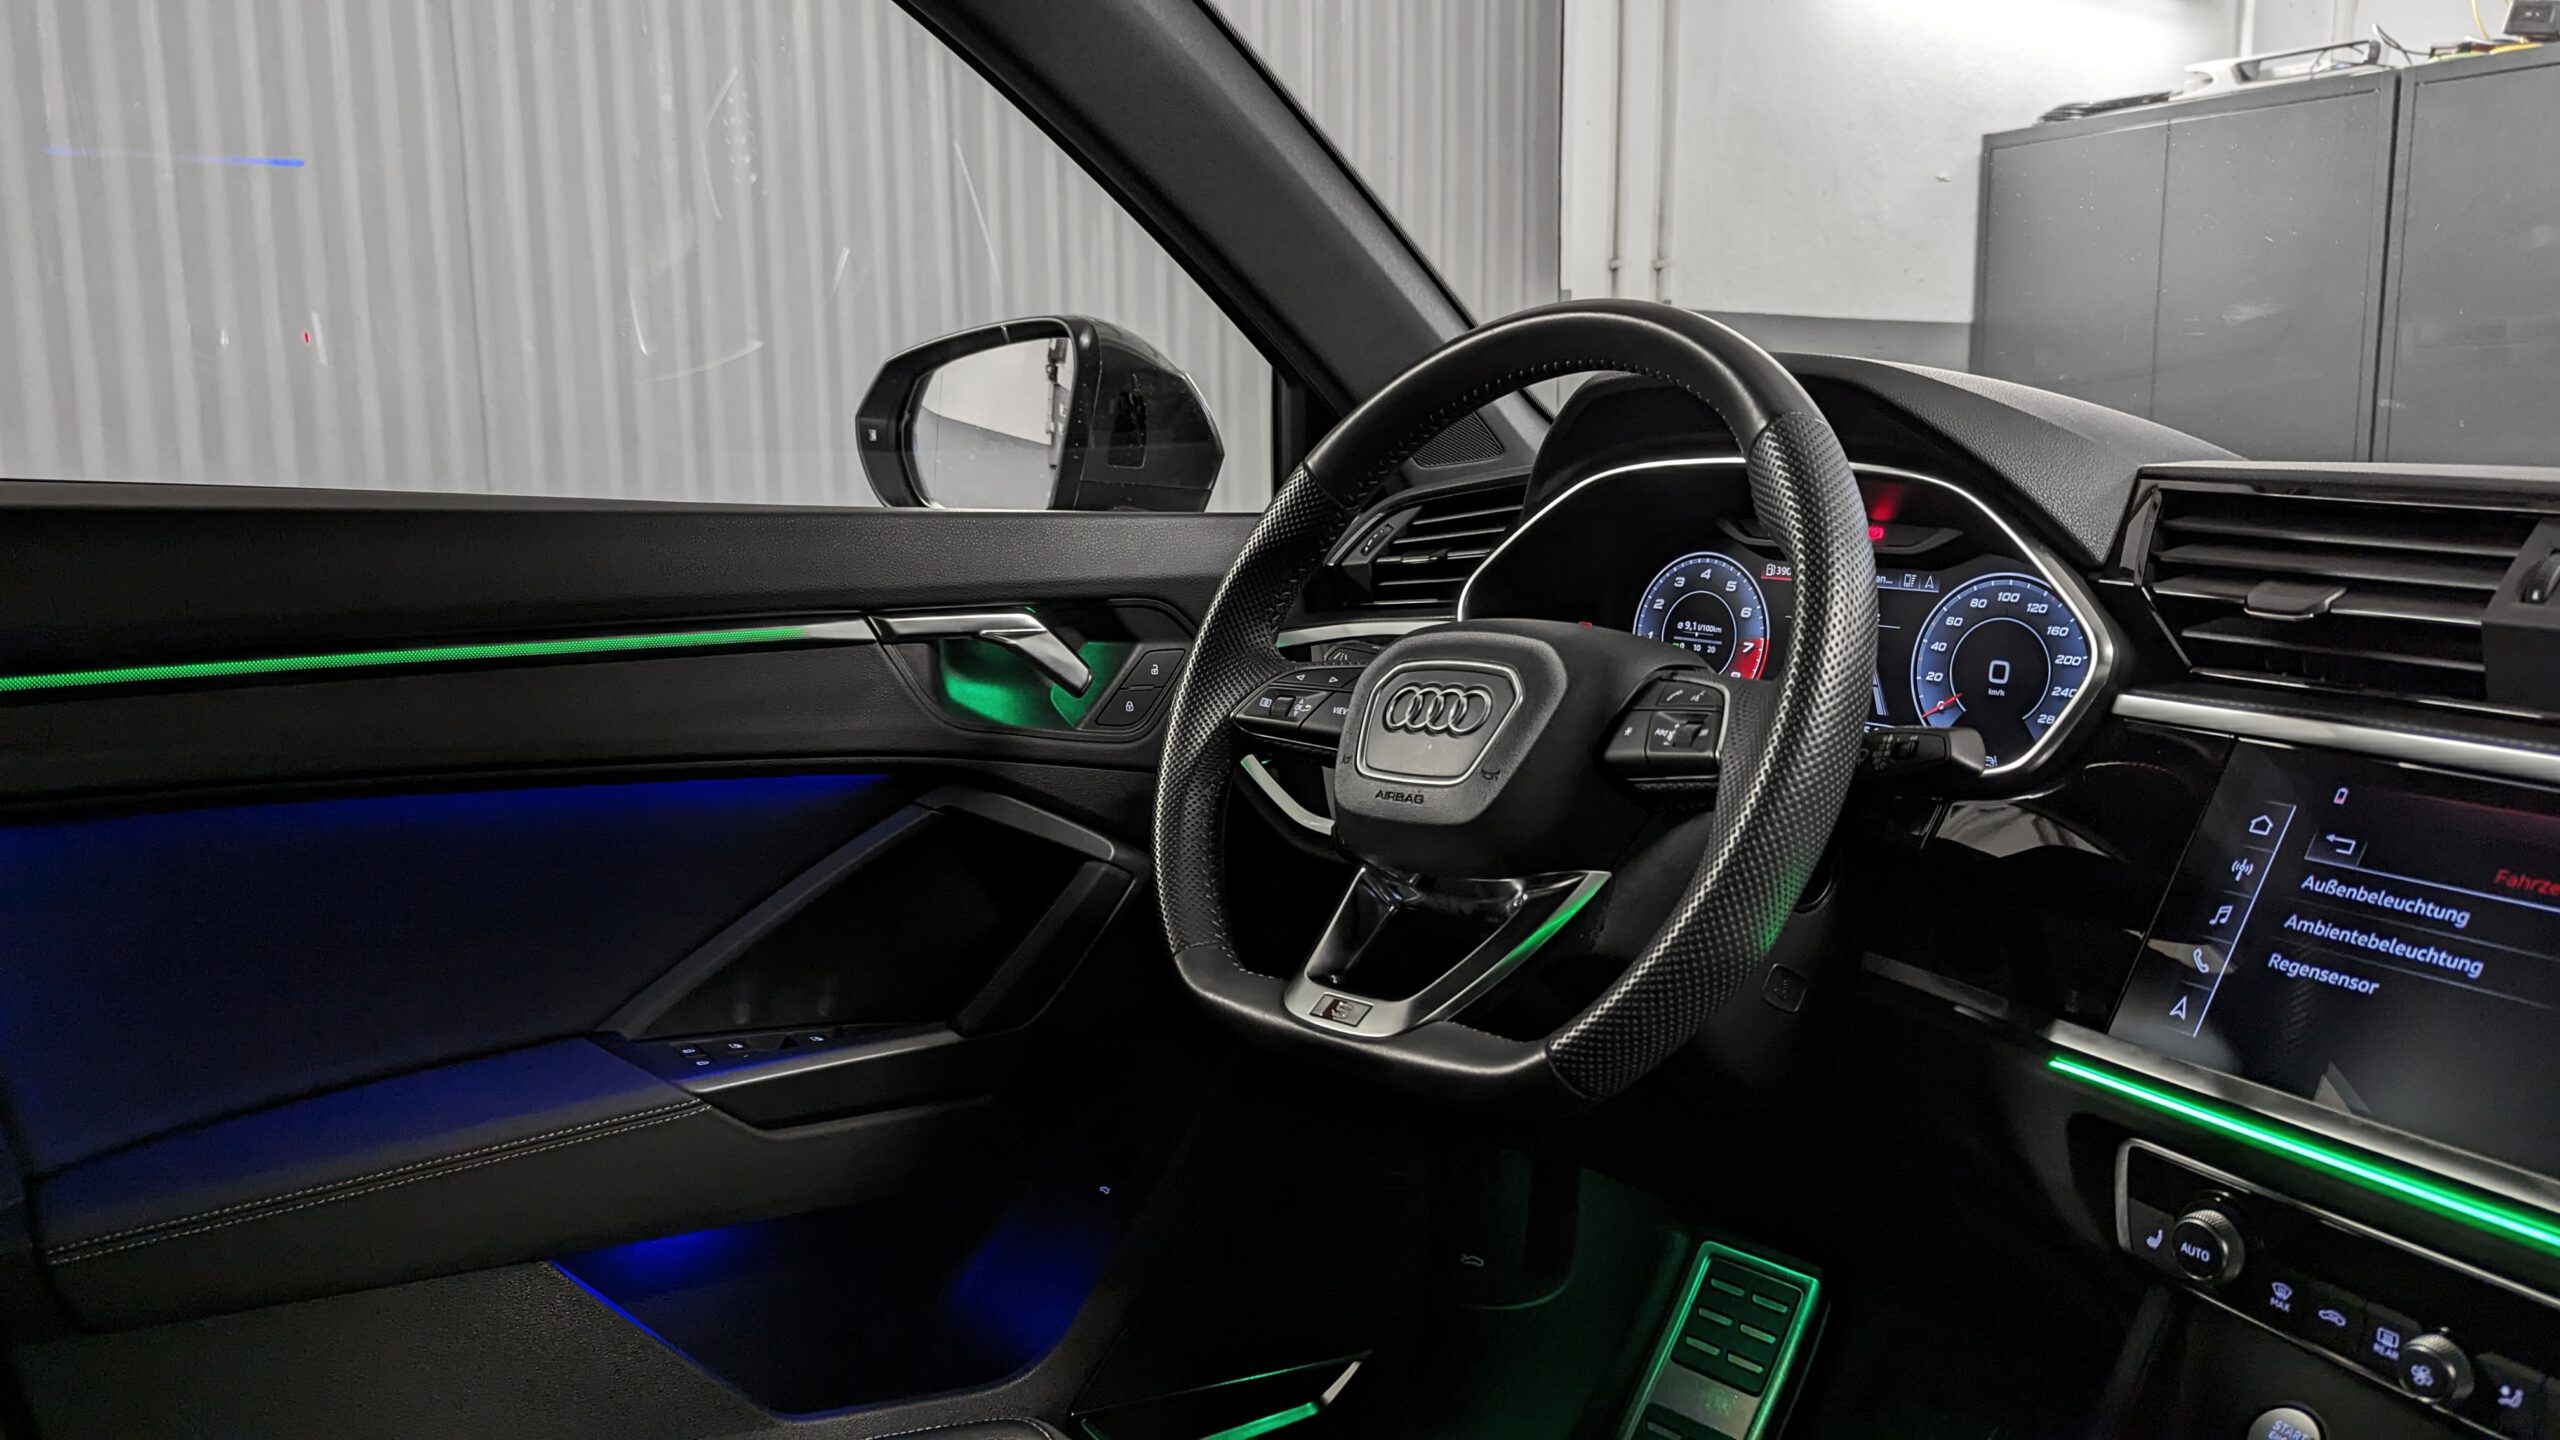 Audi Q3 F3 Türbeleuchtung LED auf AUDI SPORT Nachrüstpaket